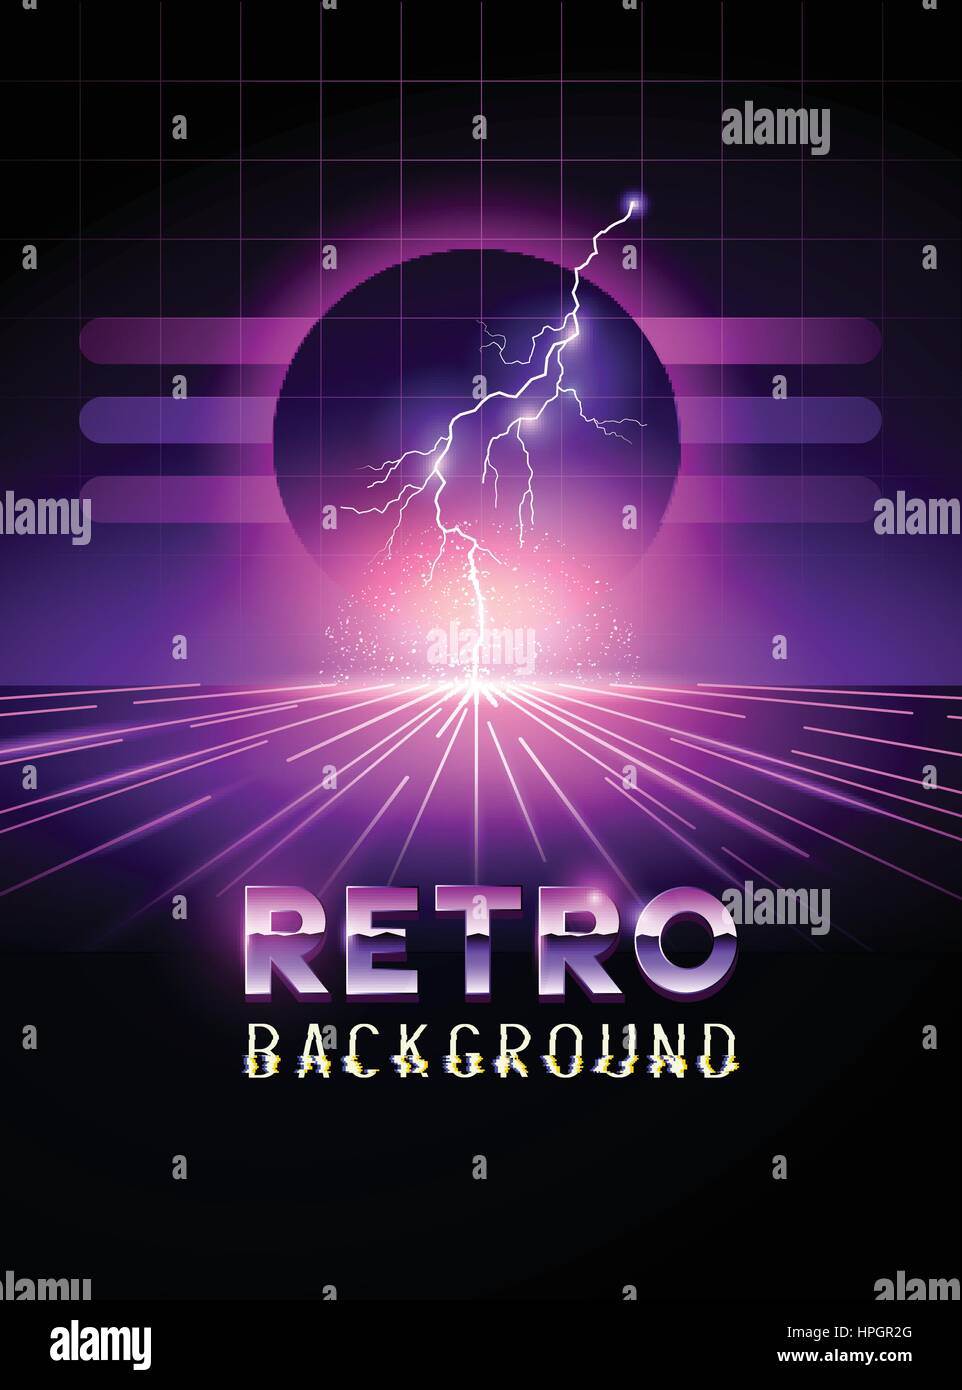 Retro-1980 Neon Horizont Hintergrund mit Lightning bolts. Vektor-illustration Stock Vektor